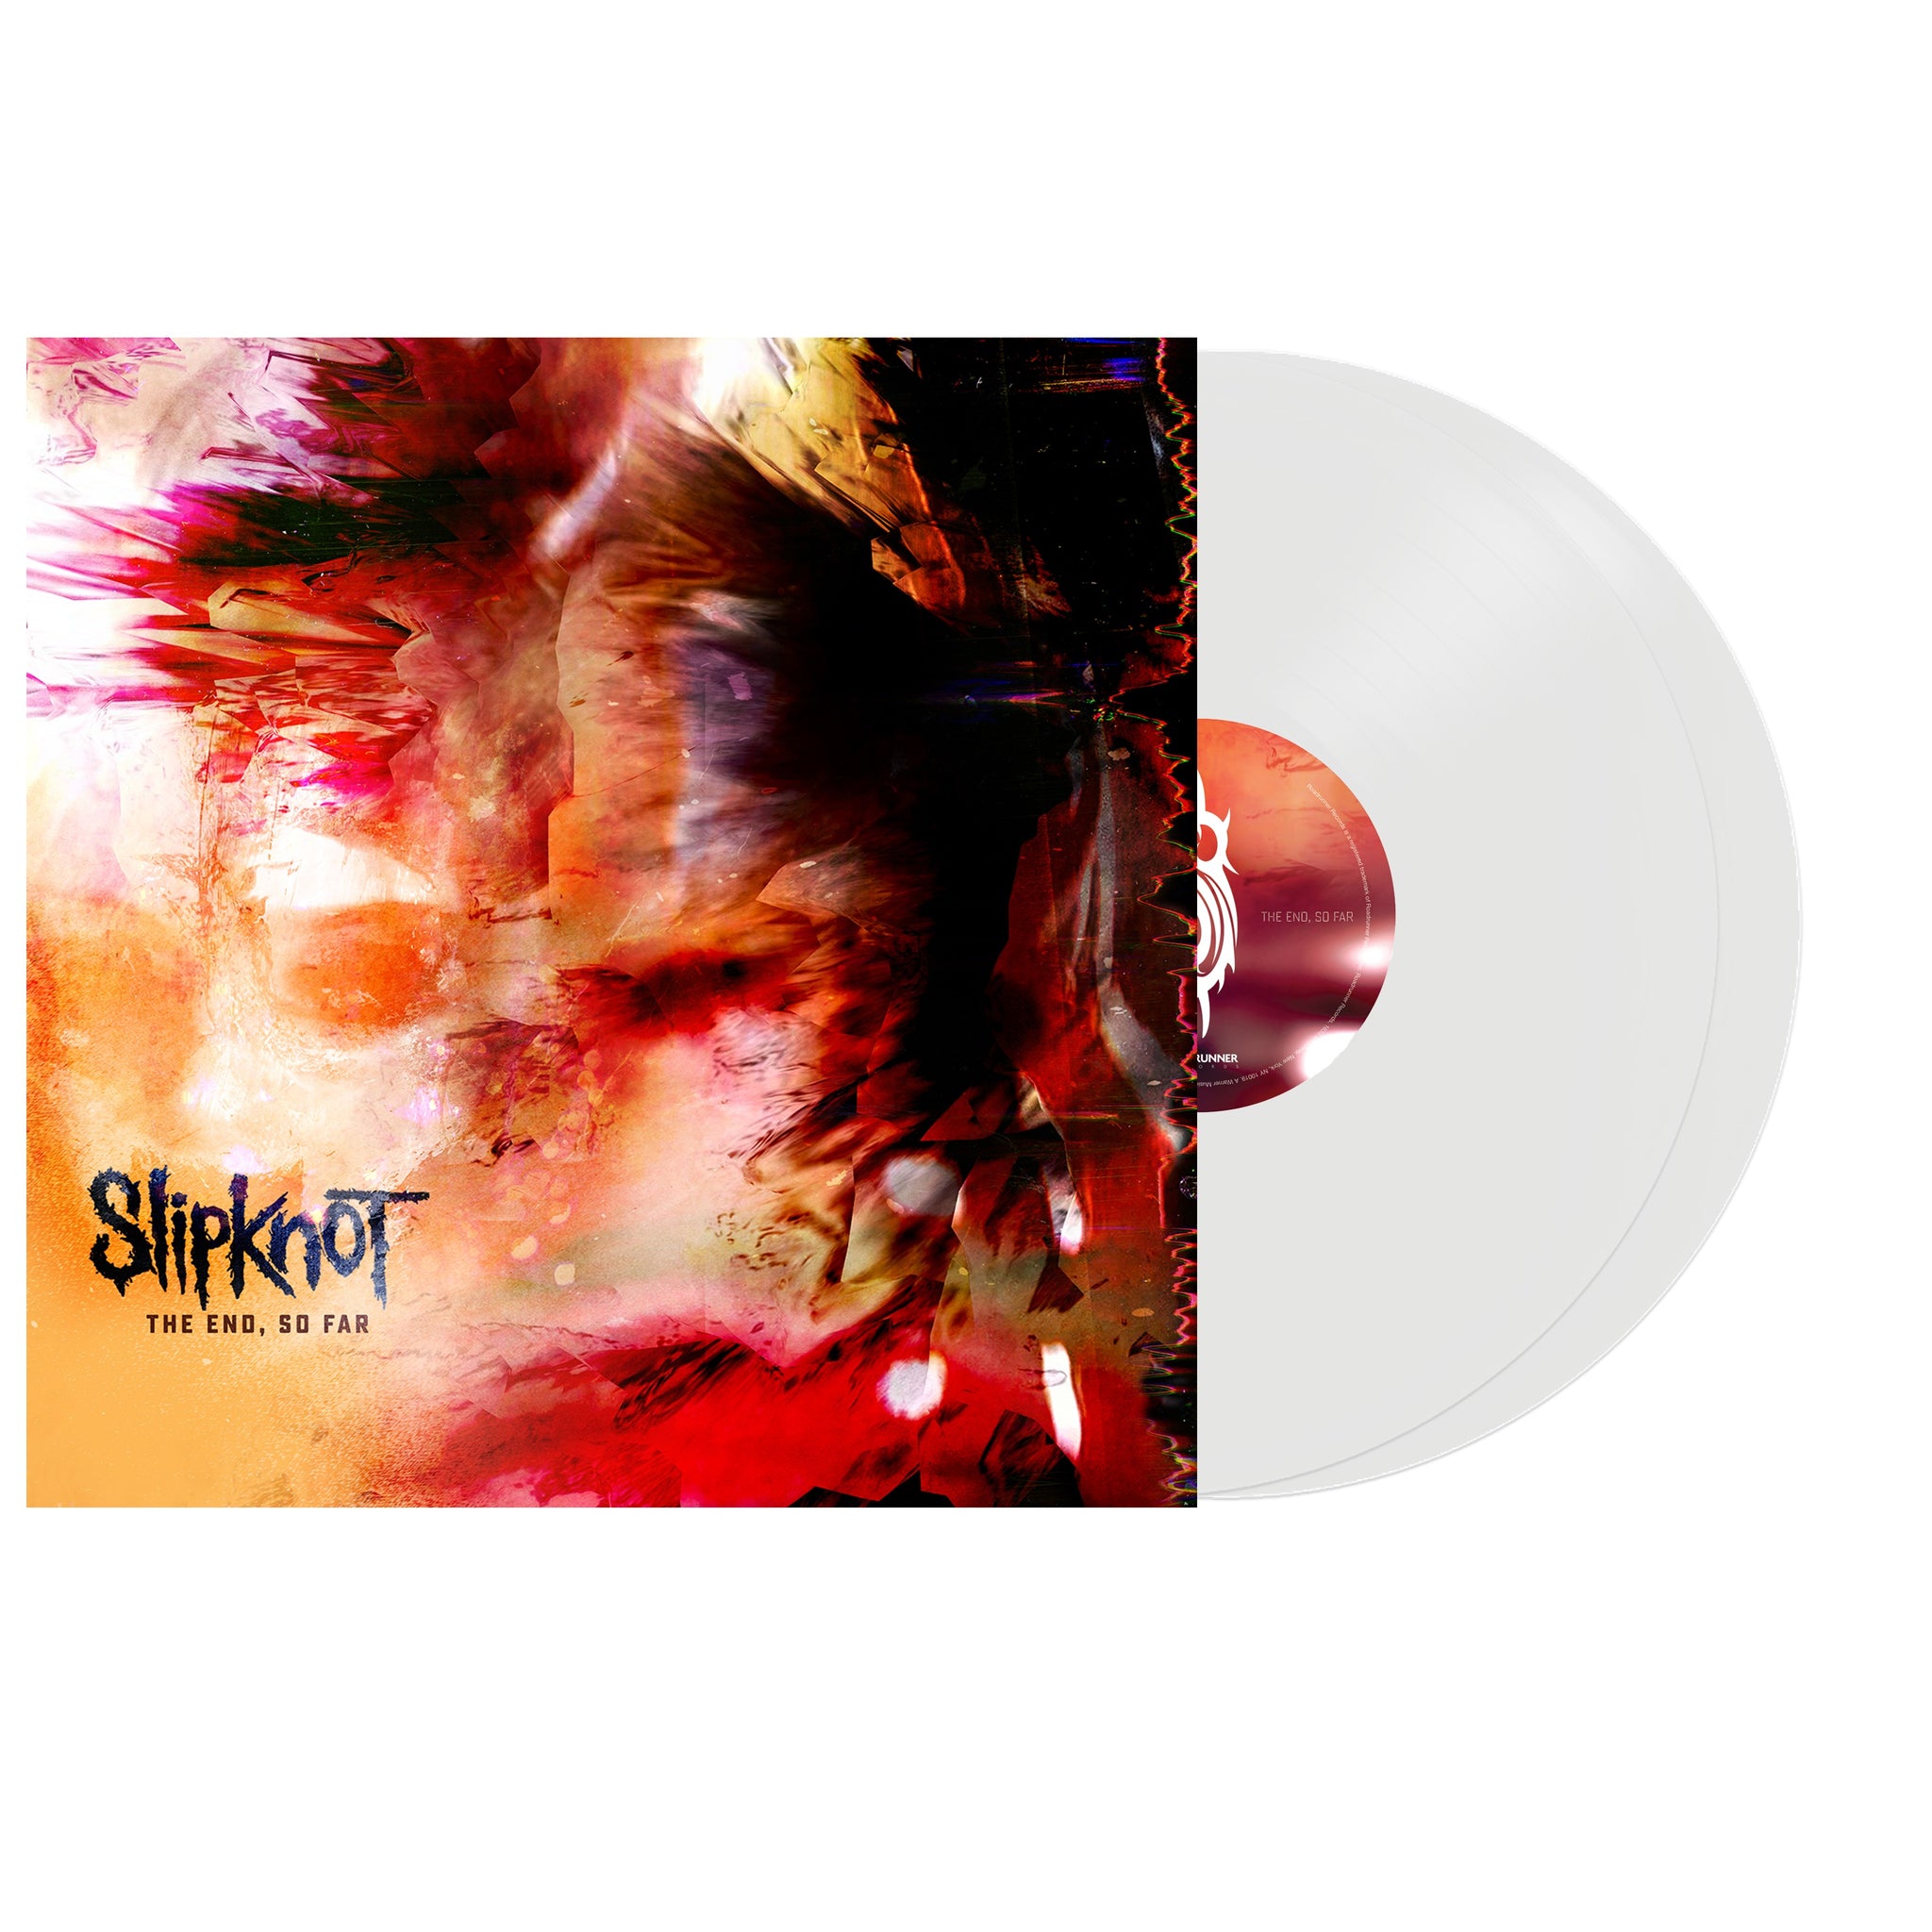 Slipknot "The End, So Far" Gatefold 2x12" 180g Ultra Clear Vinyl